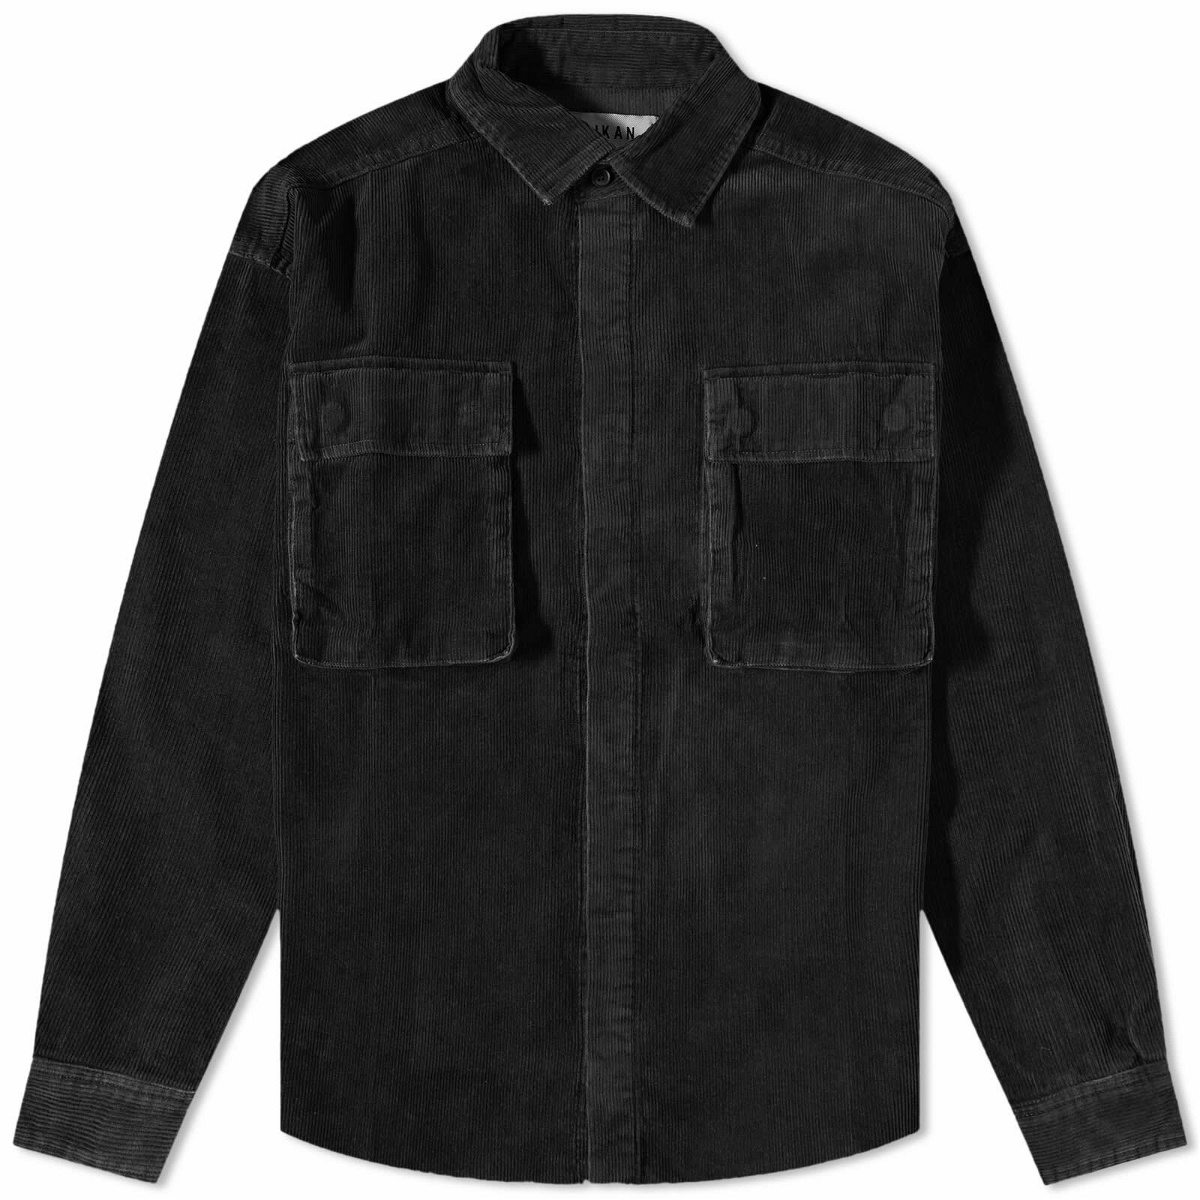 Taikan Men's Contrast Stitch Work Jacket in Black Taikan